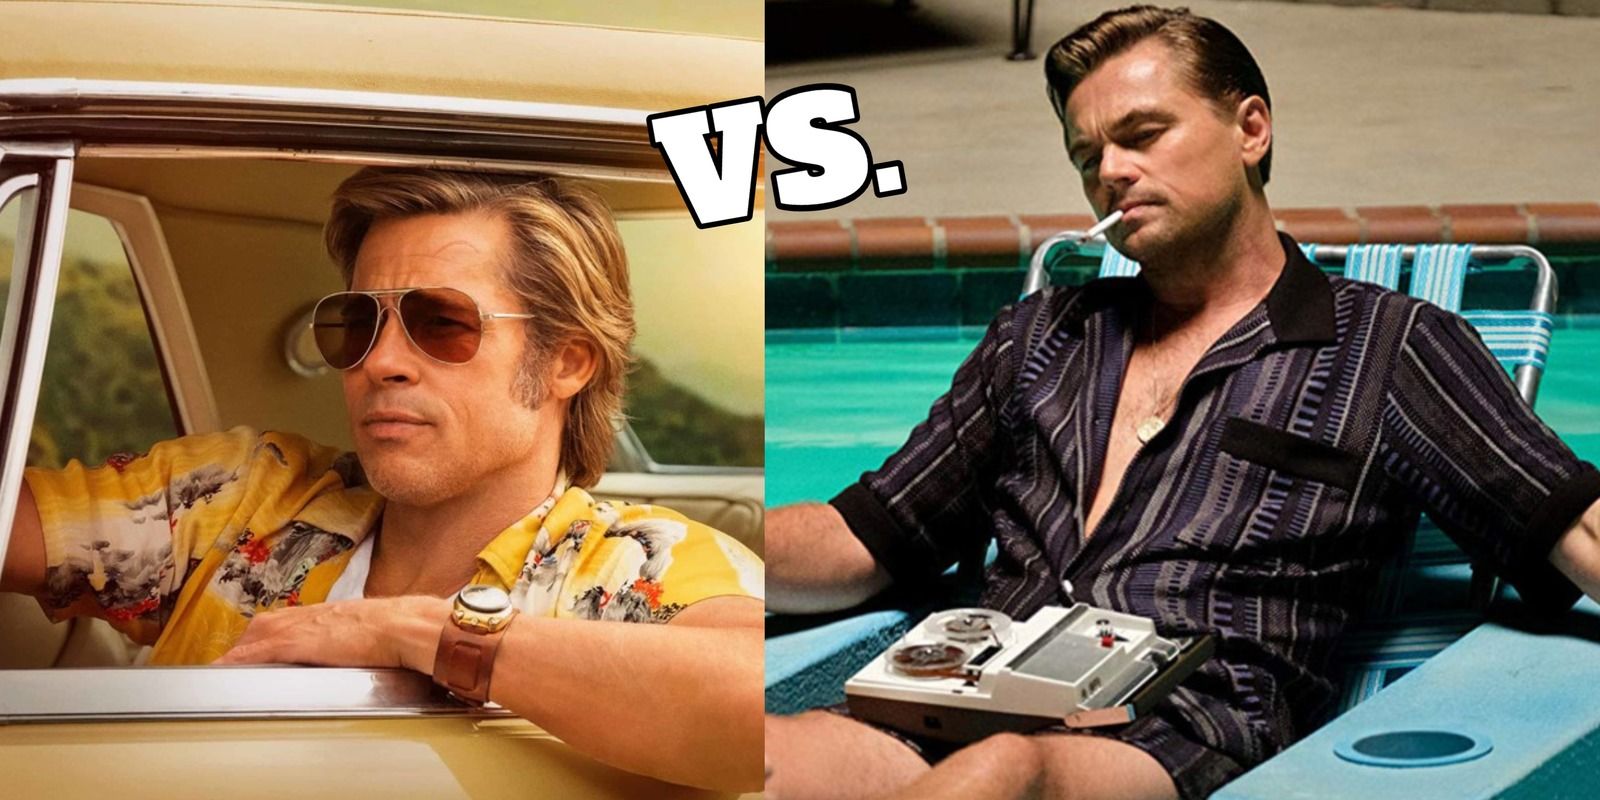 Favorite iconic Hollywood heartthrob: Brad Pitt or Leonardo